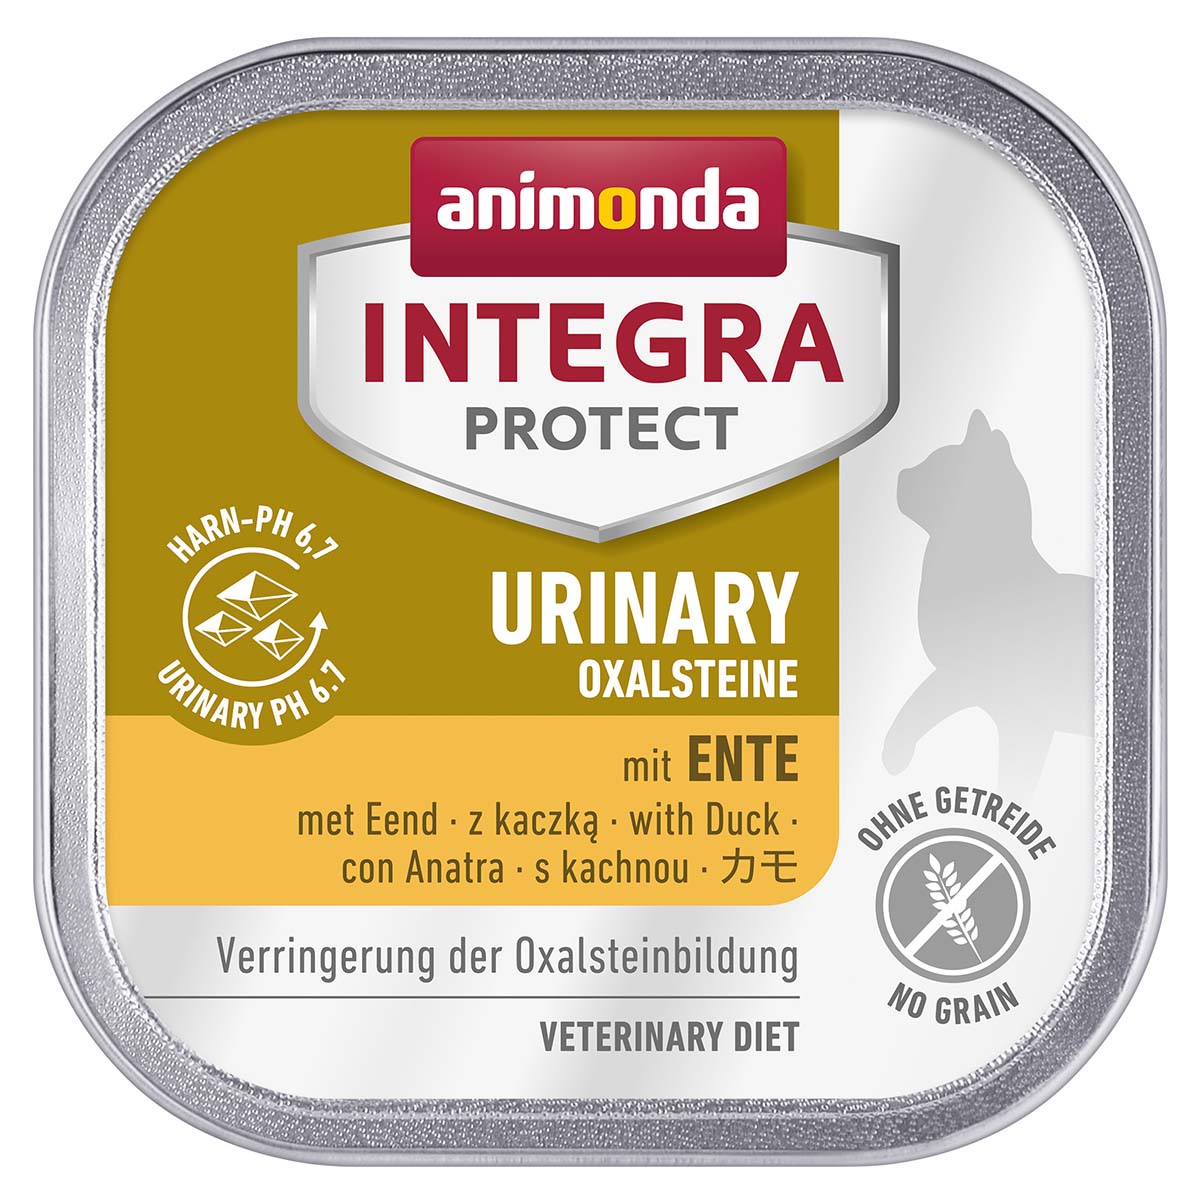 animonda INTEGRA PROTECT Adult Urinary Oxalstein mit Ente 6x100g von animonda Integra Protect